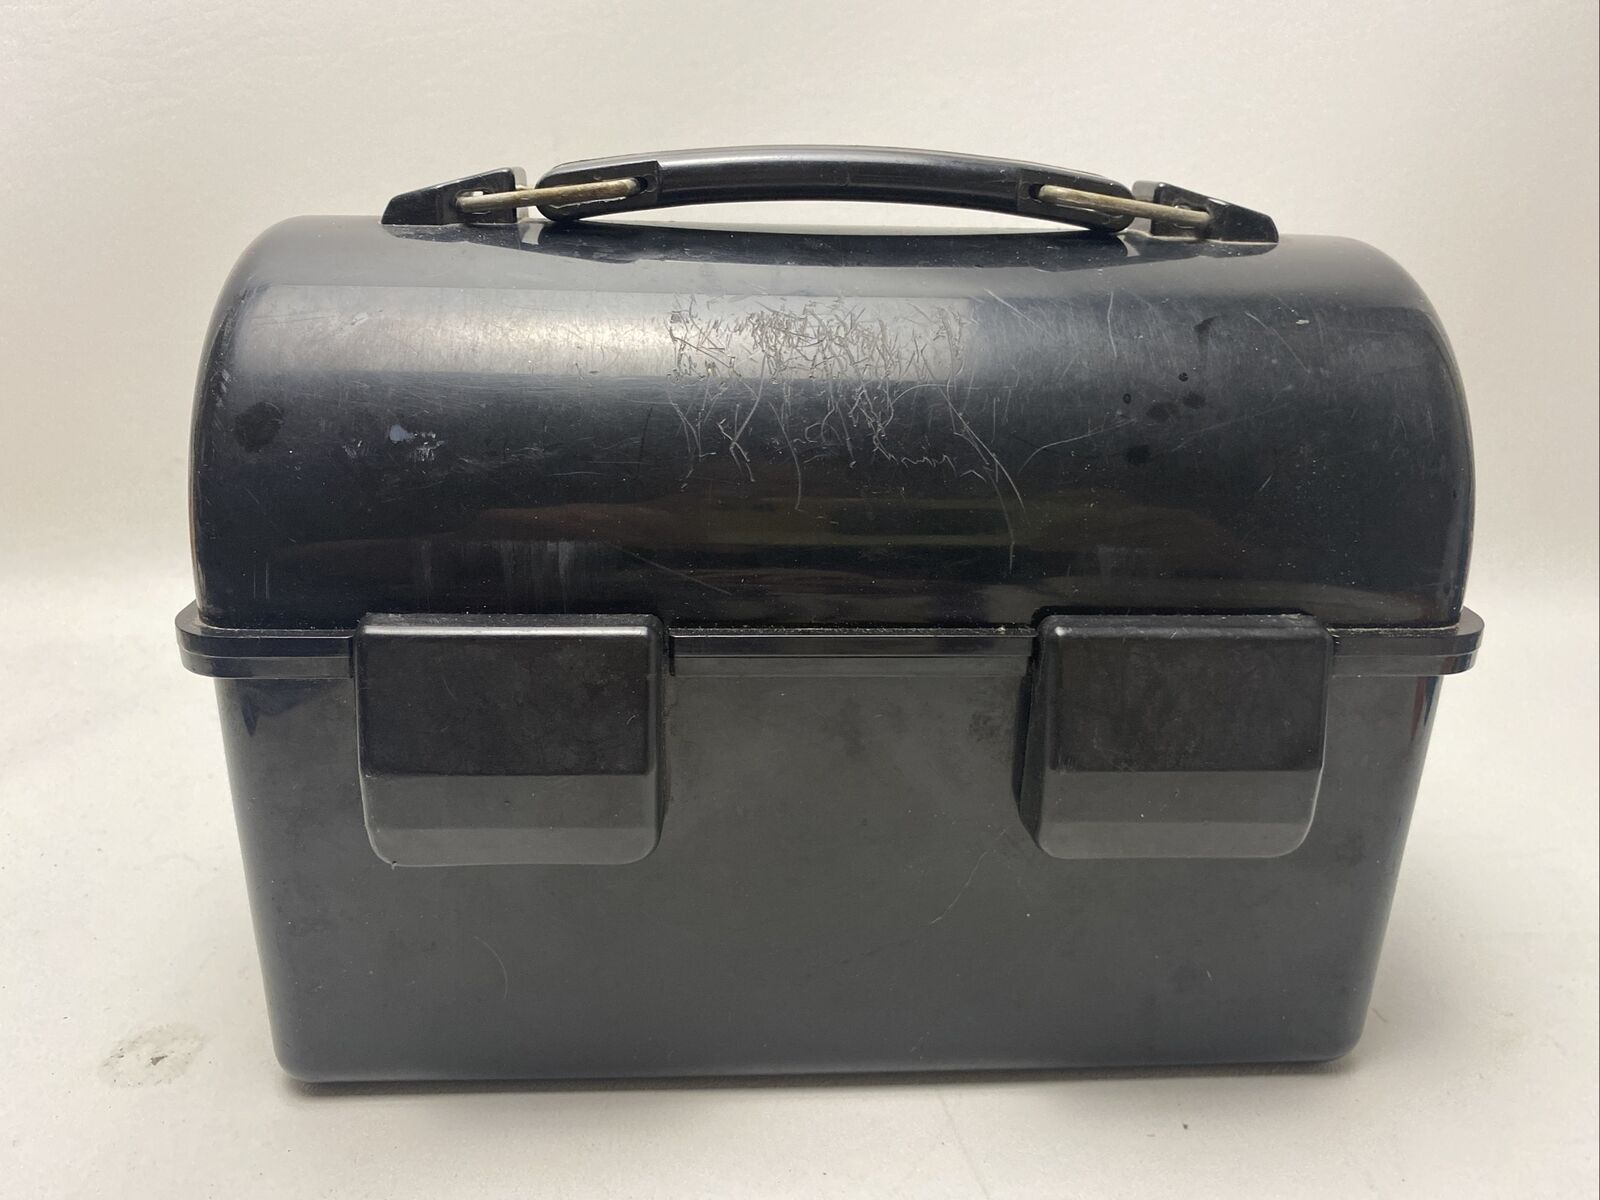 Vintage Ice Man Lunchbox By Metrokane Small Black Hard Plastic Durable LunchPail